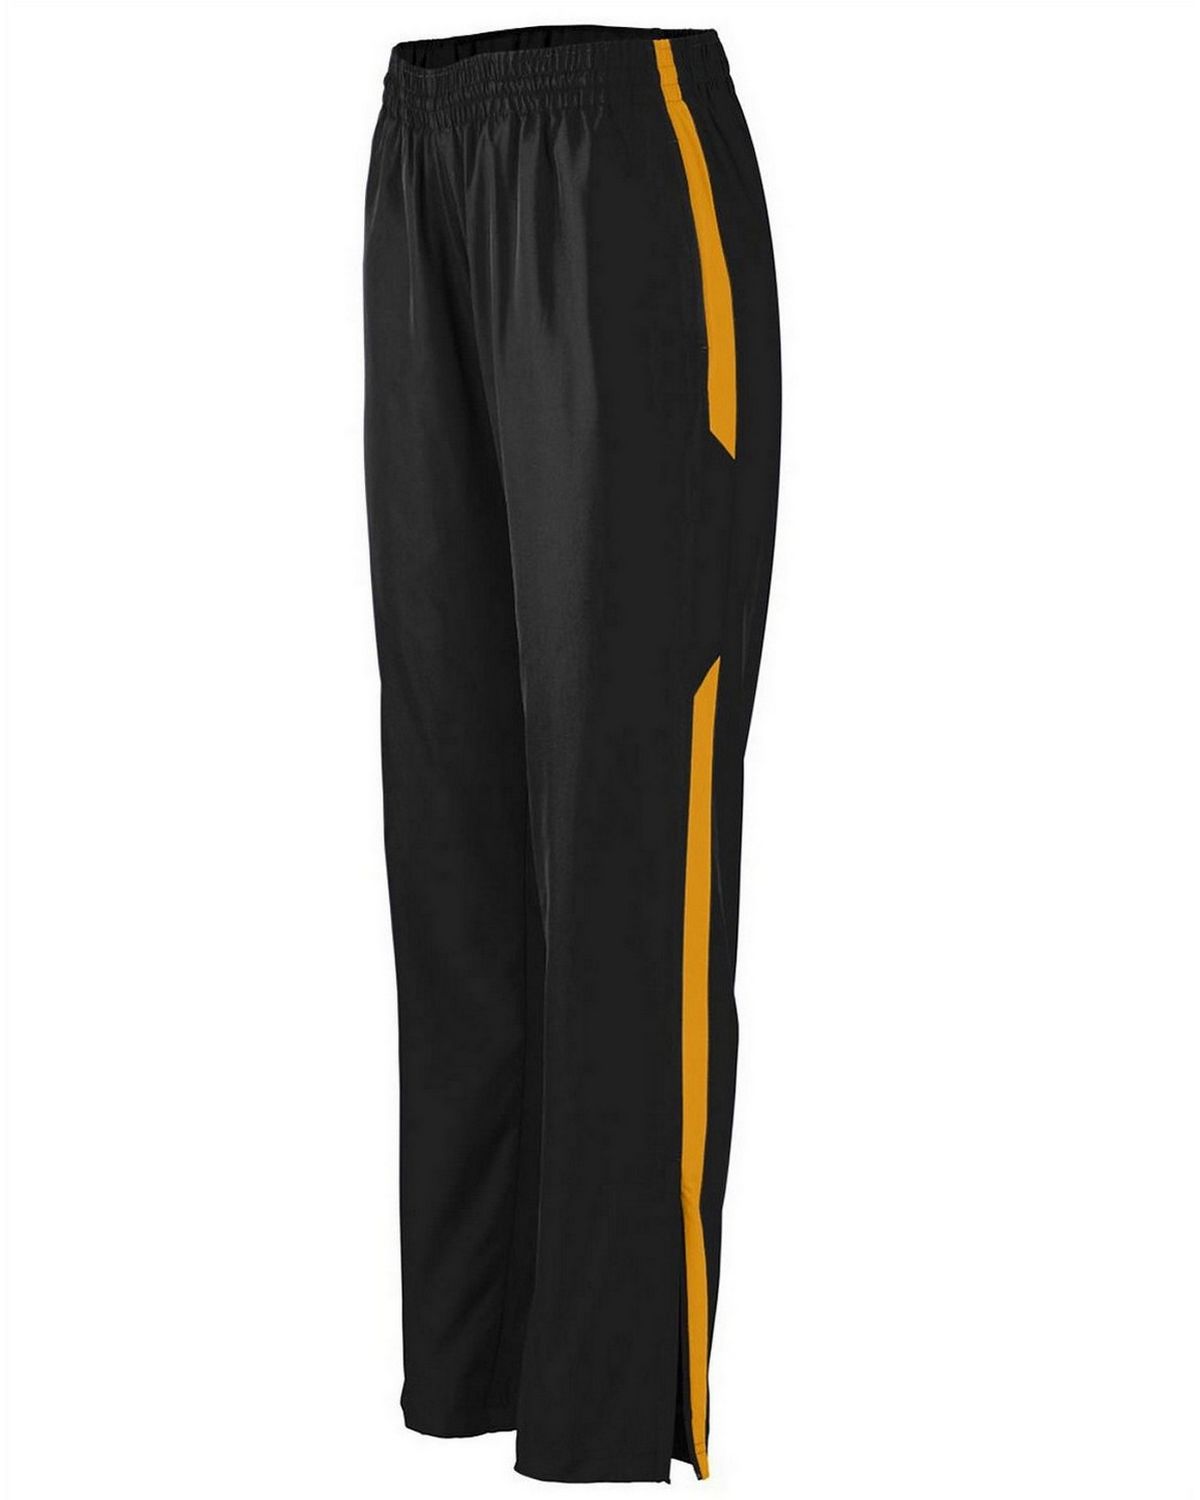 Augusta Sportswear 3506 Women's Water Resistant Micro Polyester Pant